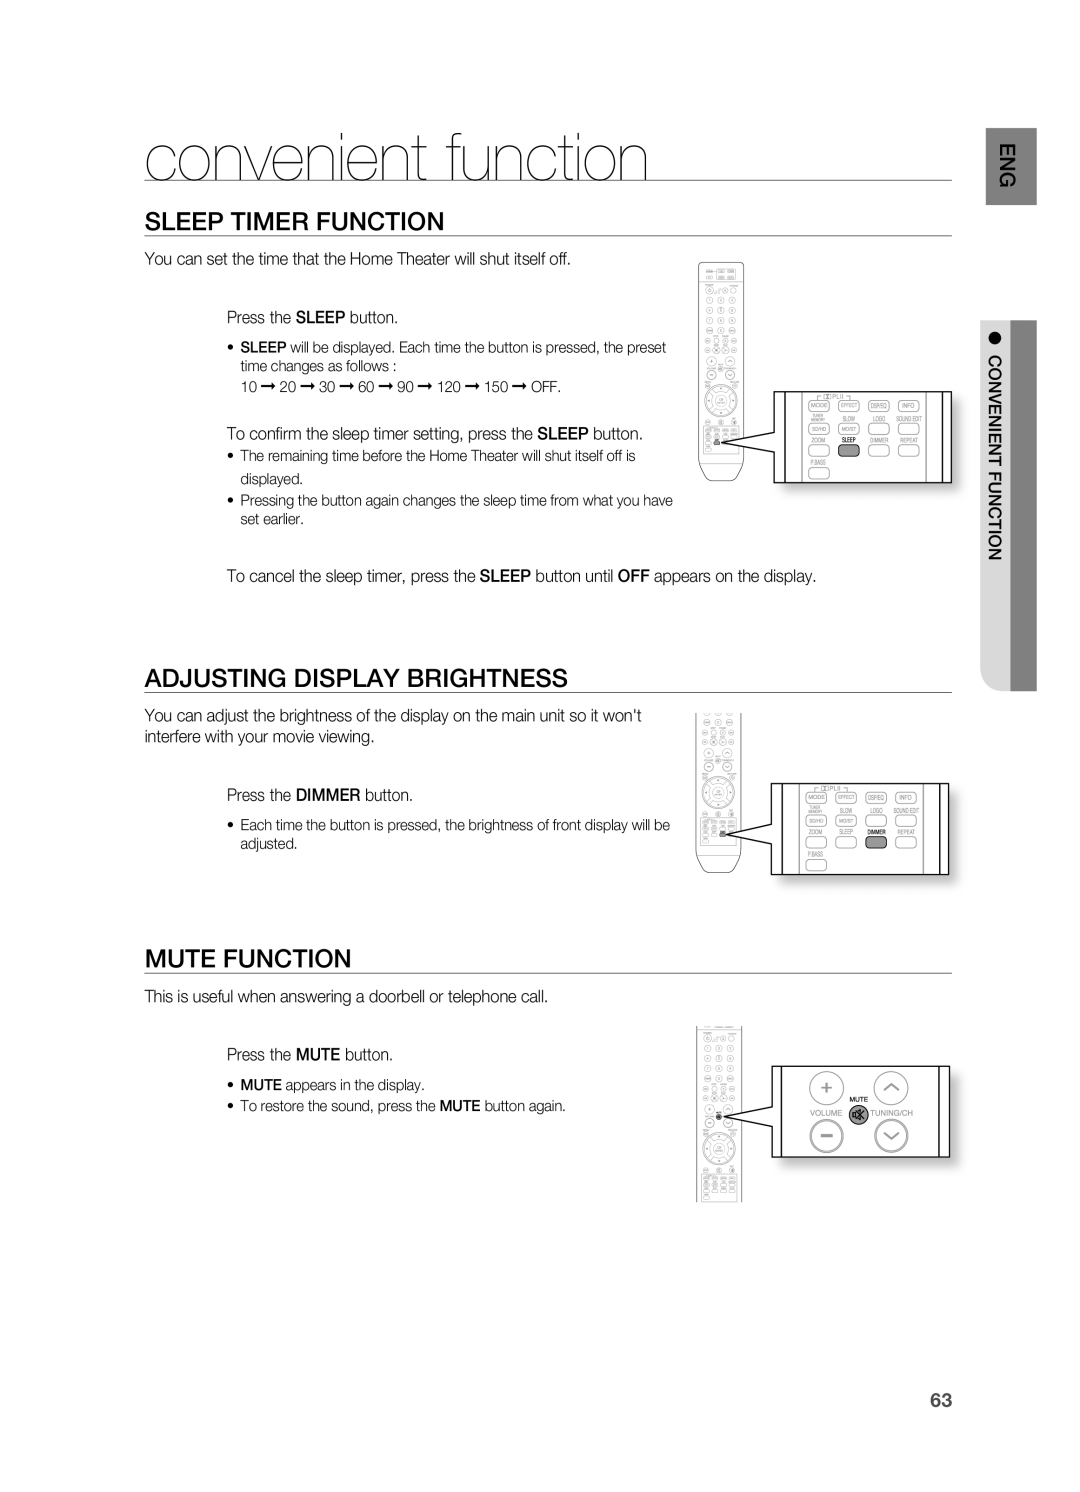 Samsung HT-TZ312 manual convenient function, SLEEP timEr fUnCtiOn, aDJUStinG DiSPLay BriGHtnESS, mUtE fUnCtiOn 